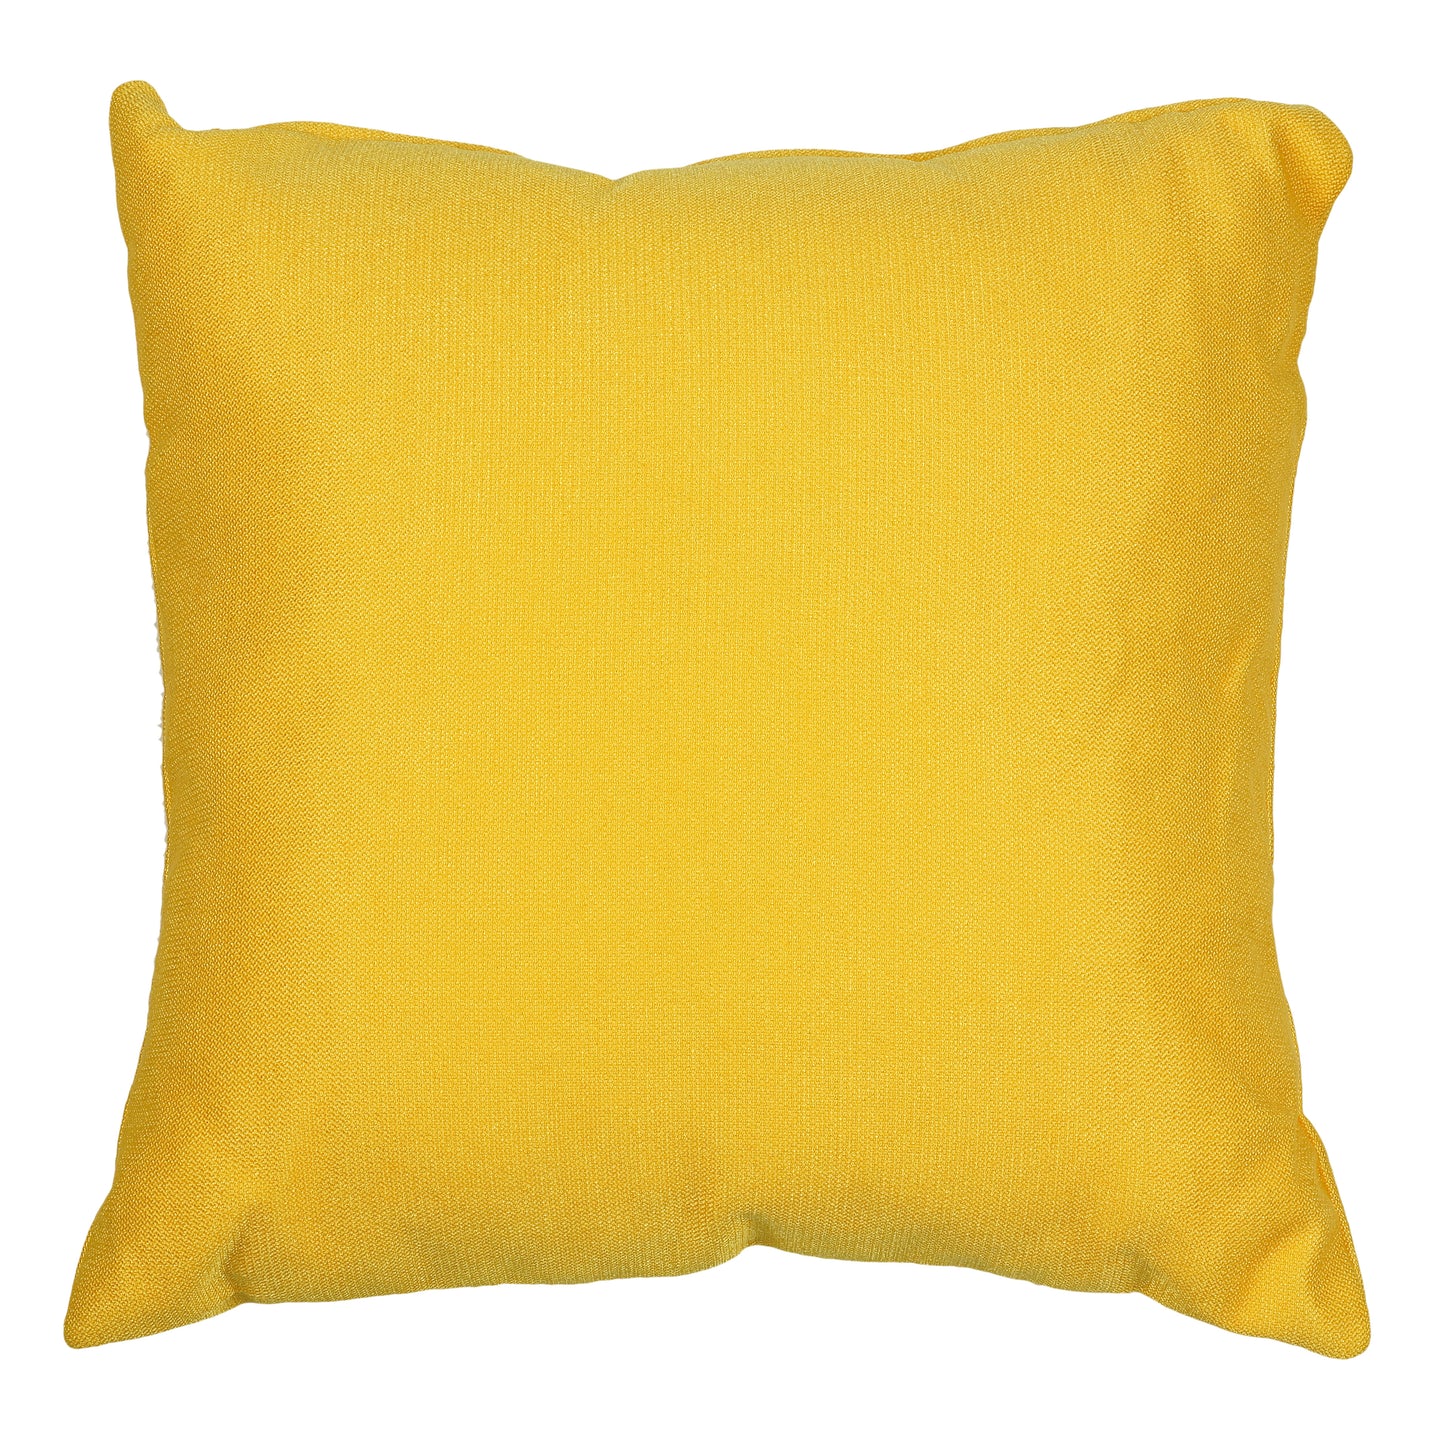 Cortesi Home Aimee Decorative Square Accent Pillow, Yellow